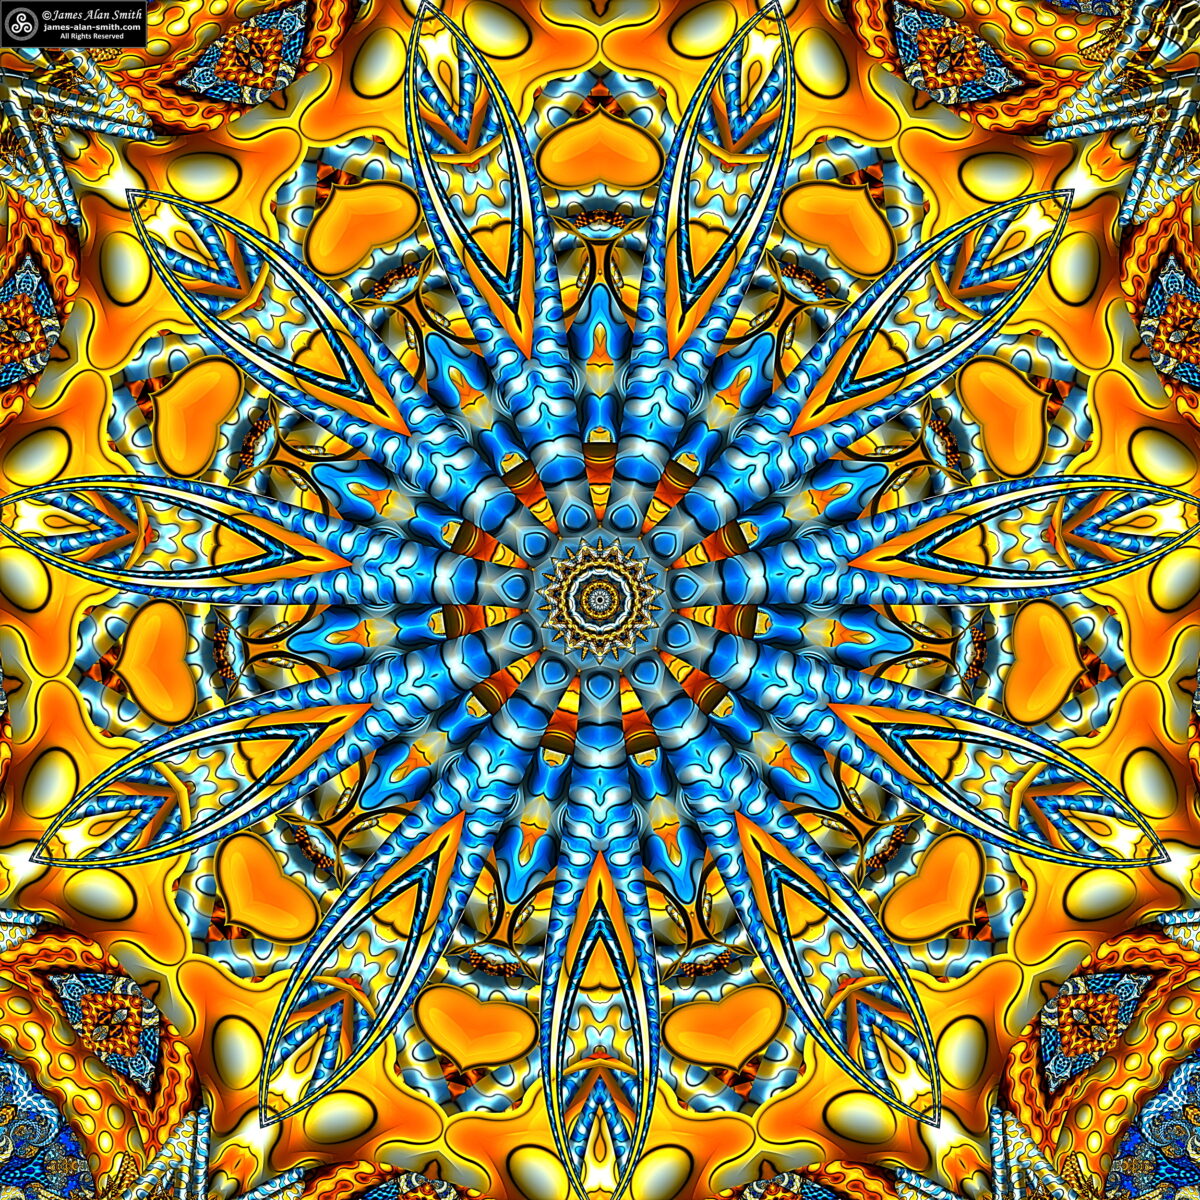 Eleven Pincer Mandala: Artwork by James Alan Smith